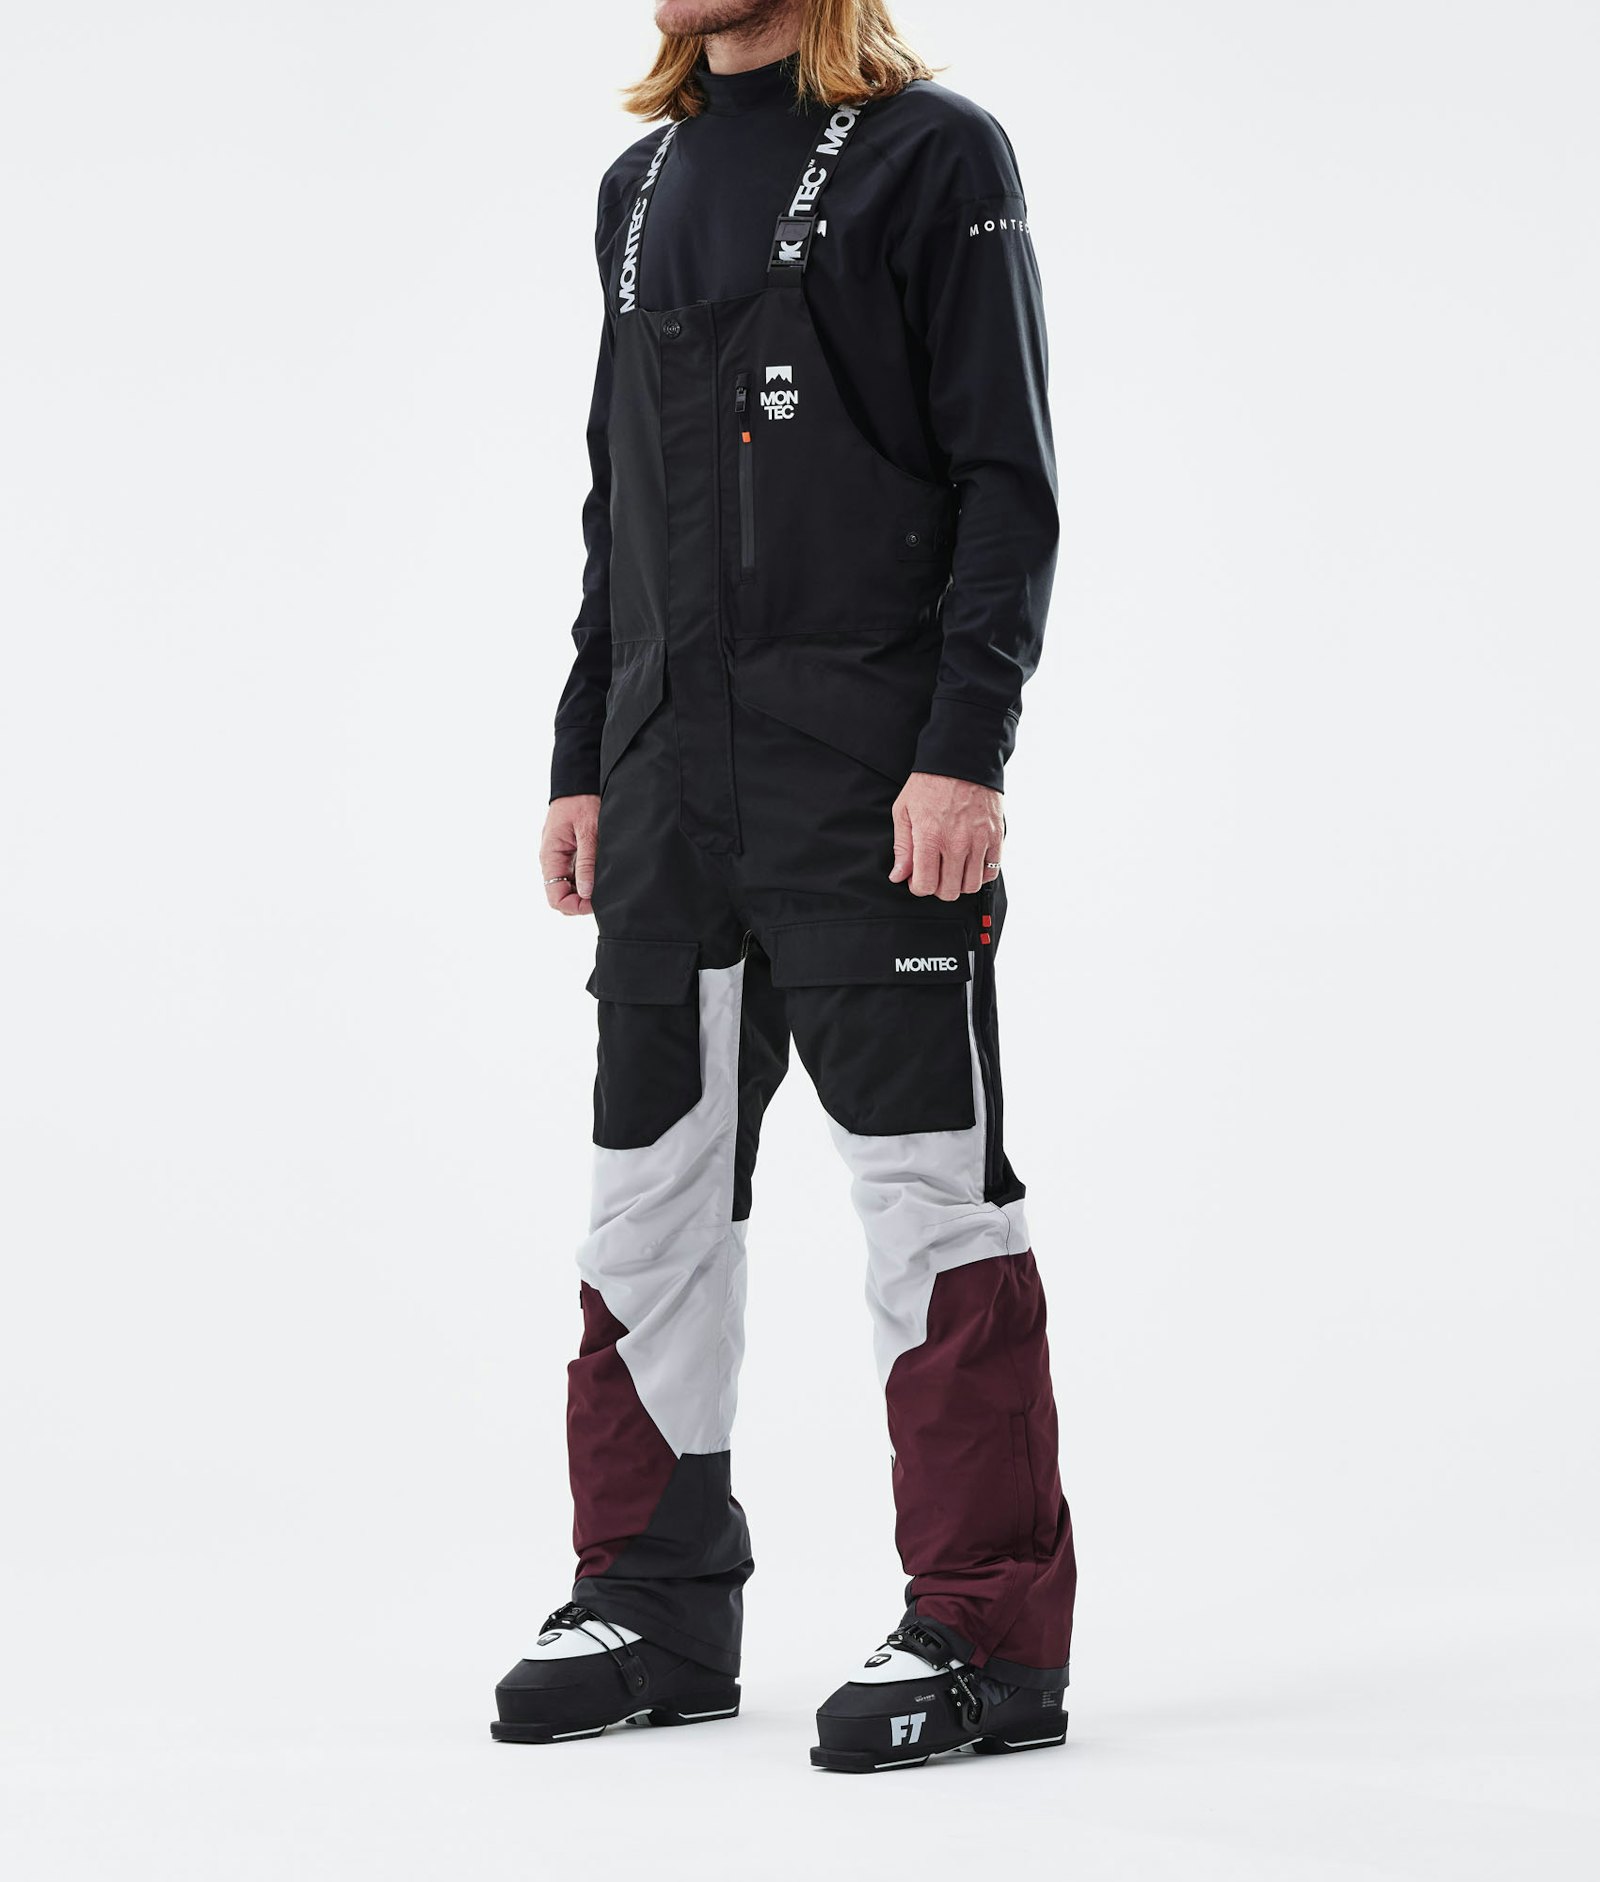 Fawk 2021 スキーパンツ メンズ Black/Light Grey/Burgundy